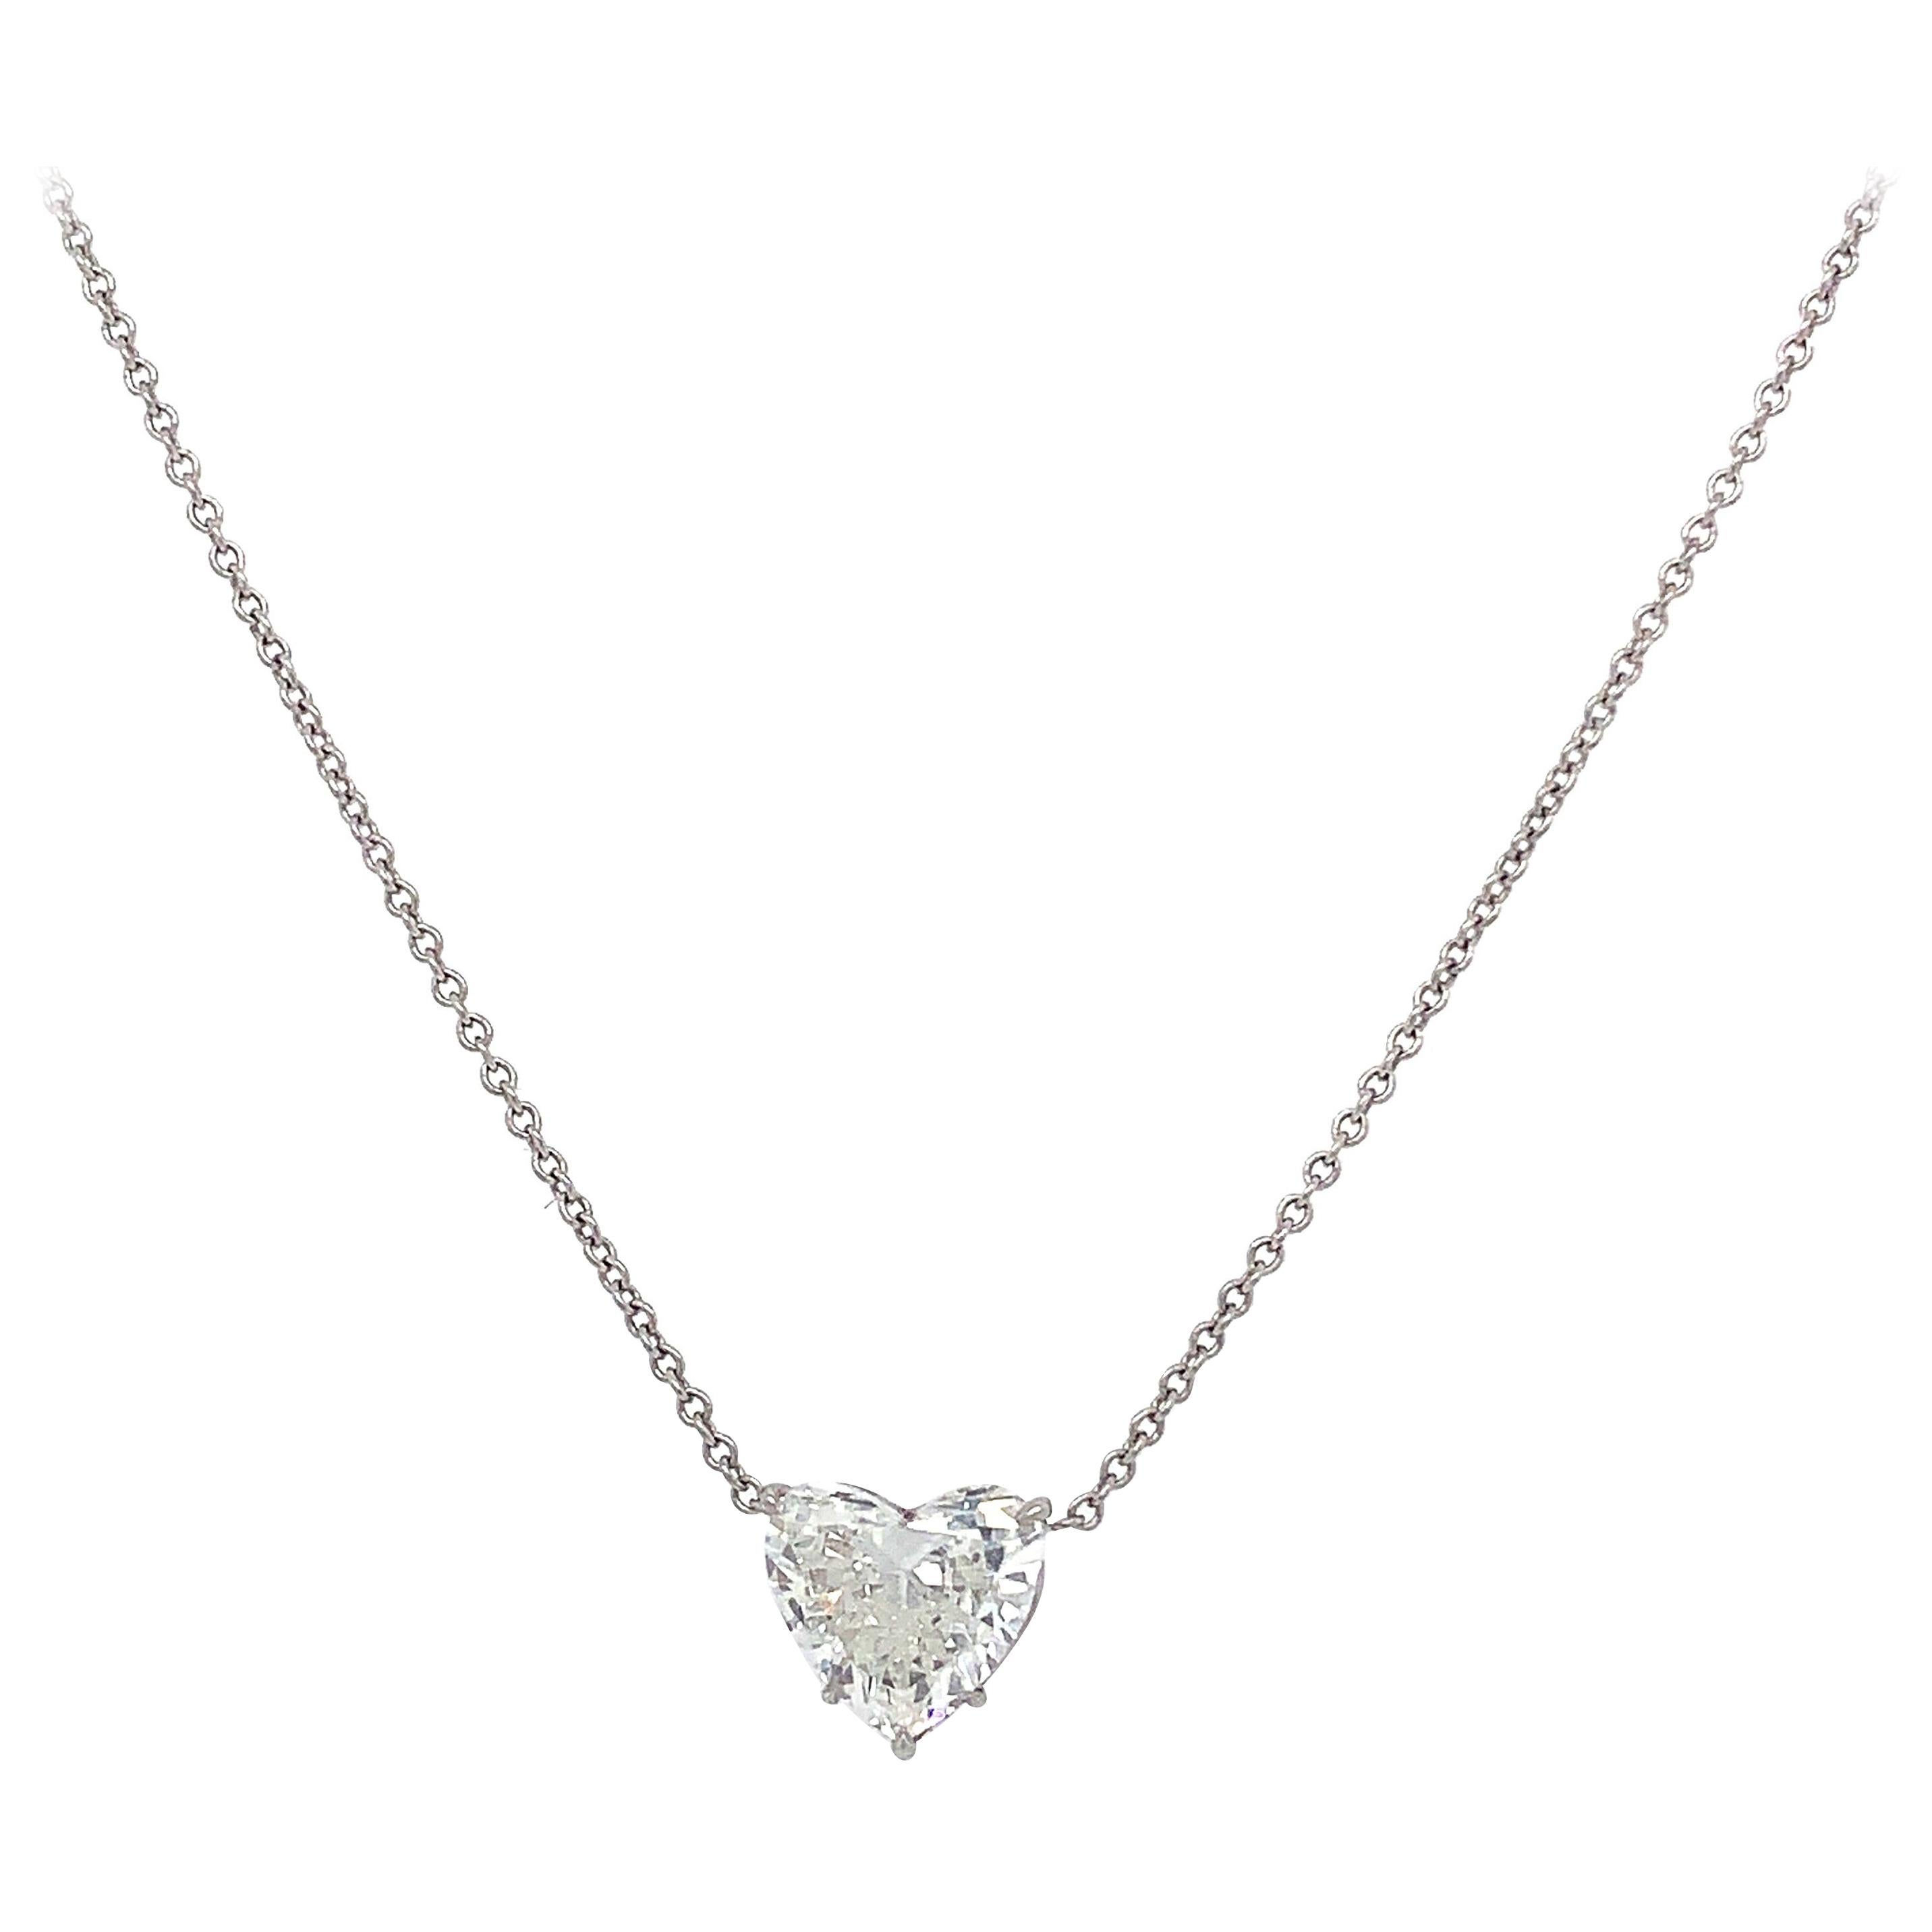 ISSAC NUSSBAUM NEW YORK 1.50 Carat Heart Shape Diamond Pendant Necklace 